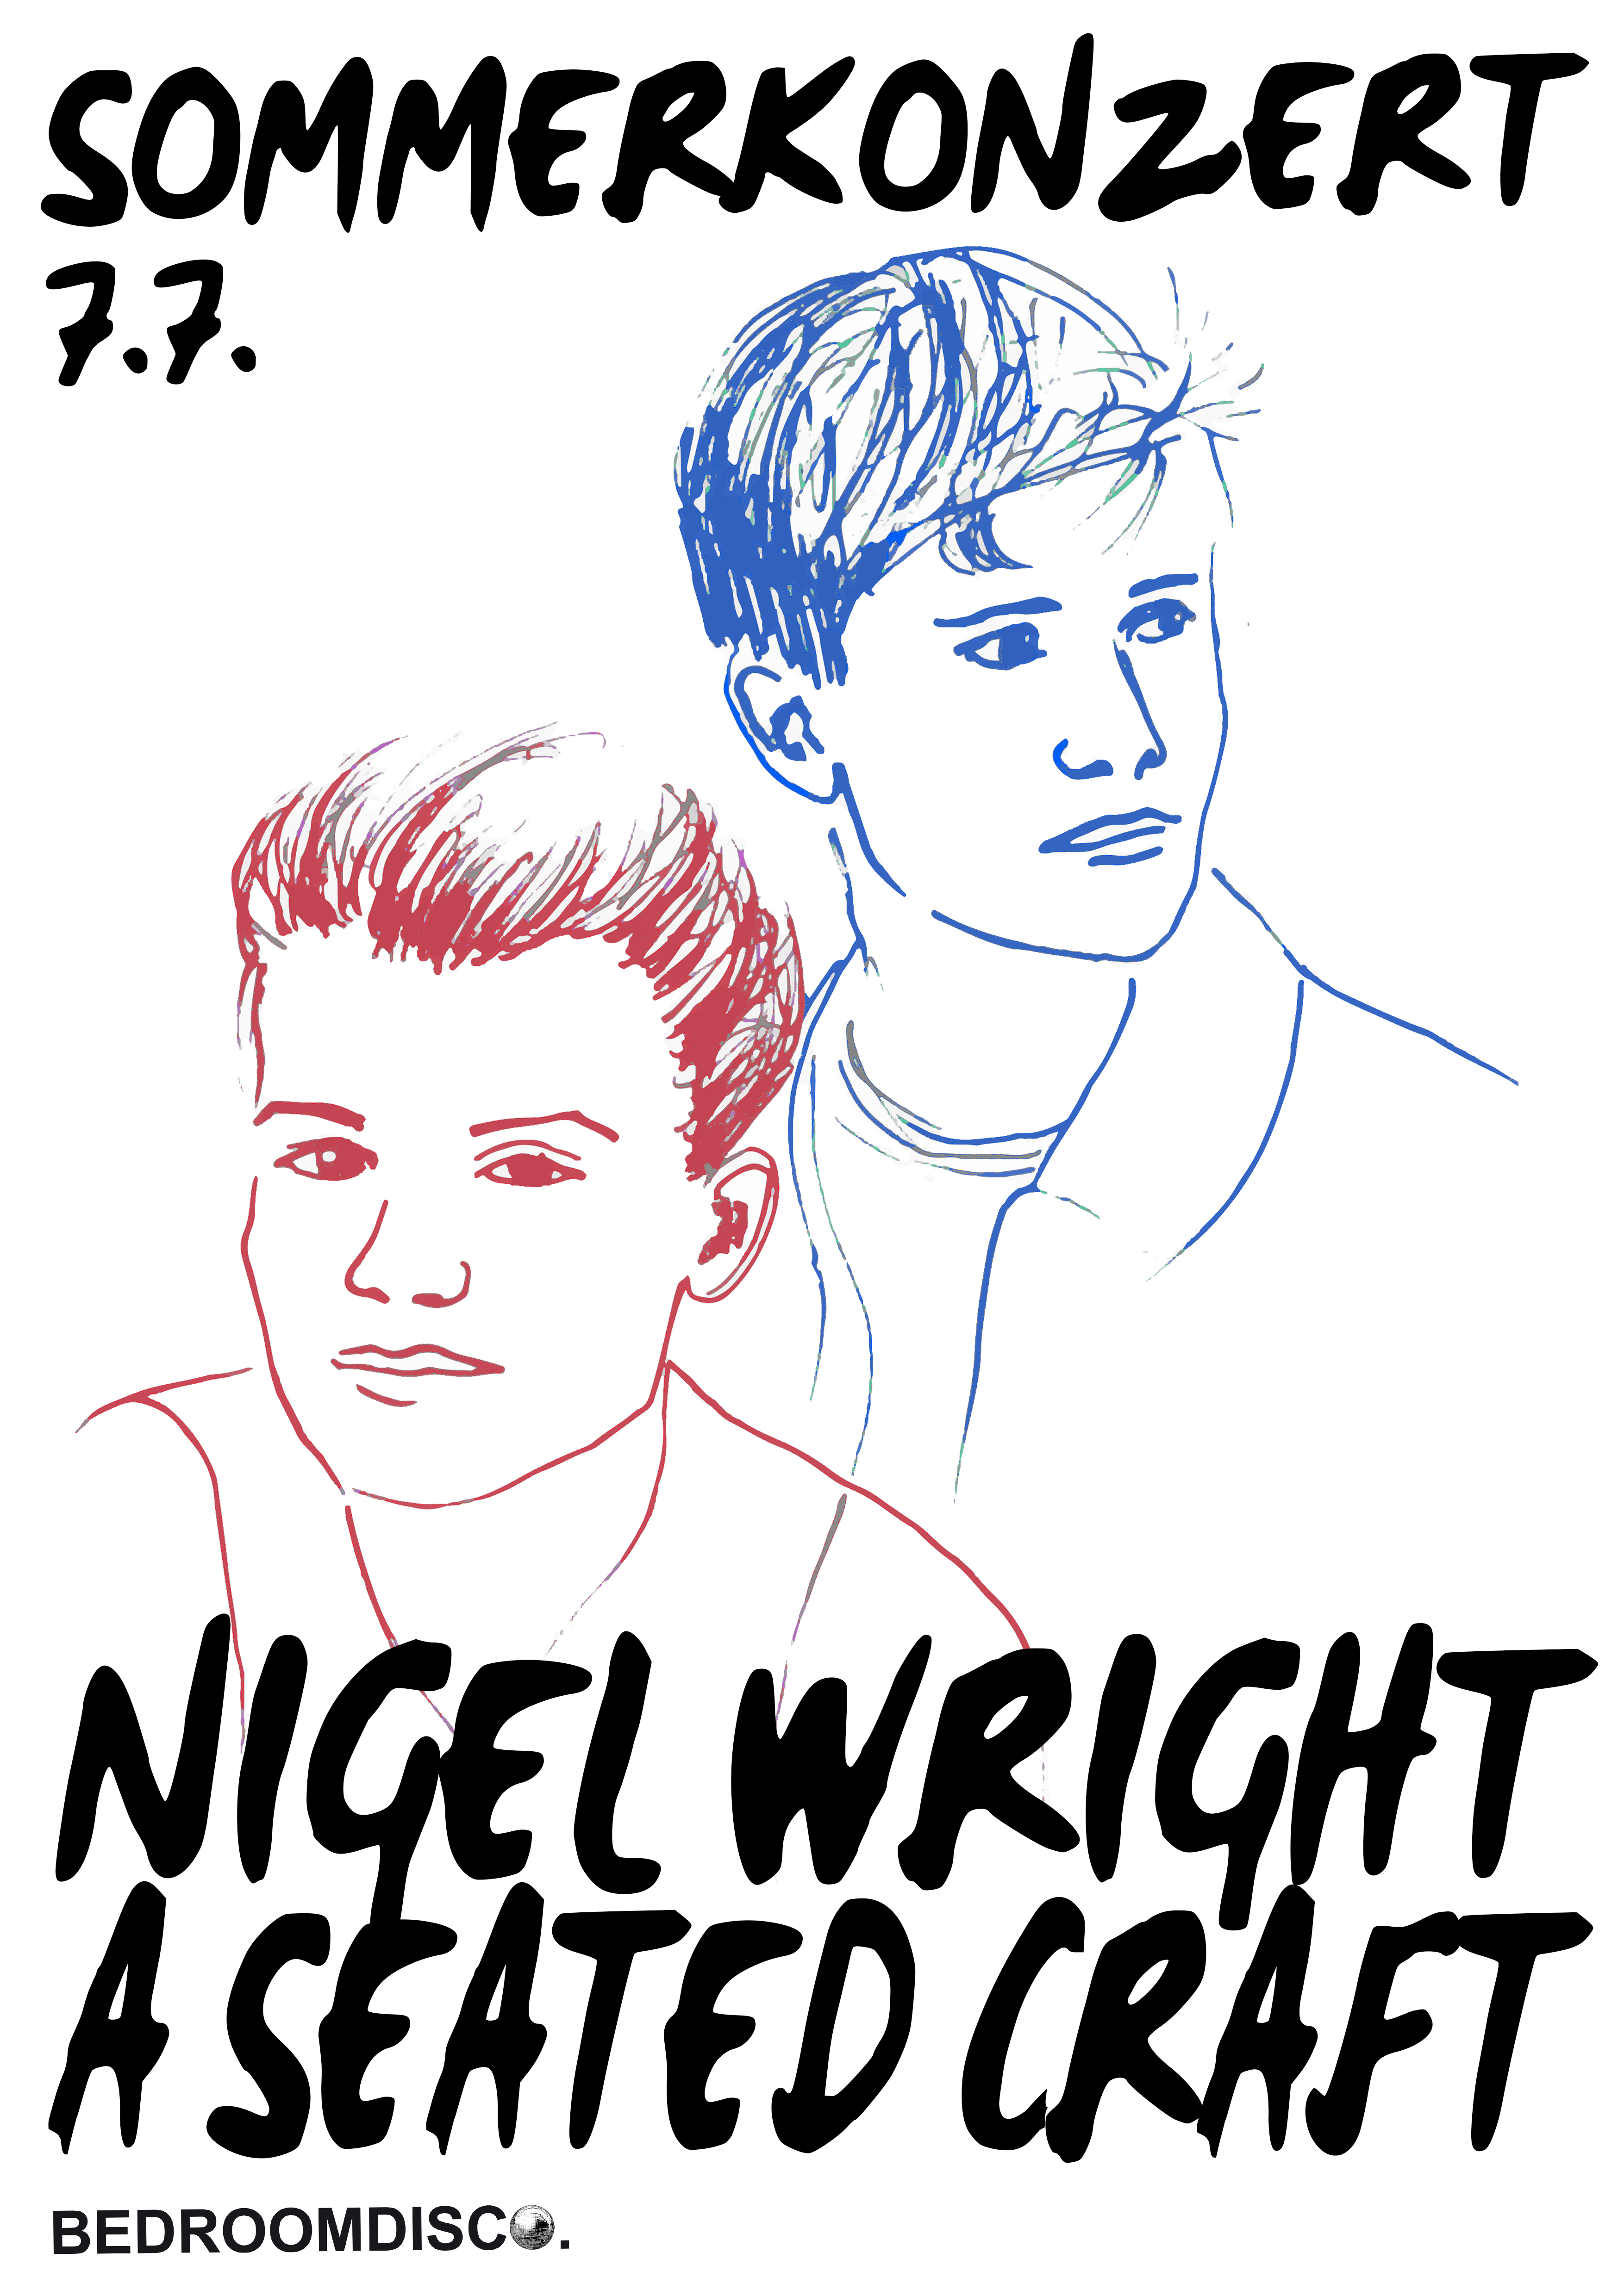 Sommerkonzert mit NIGEL WRIGHT + A SEATED CRAFT